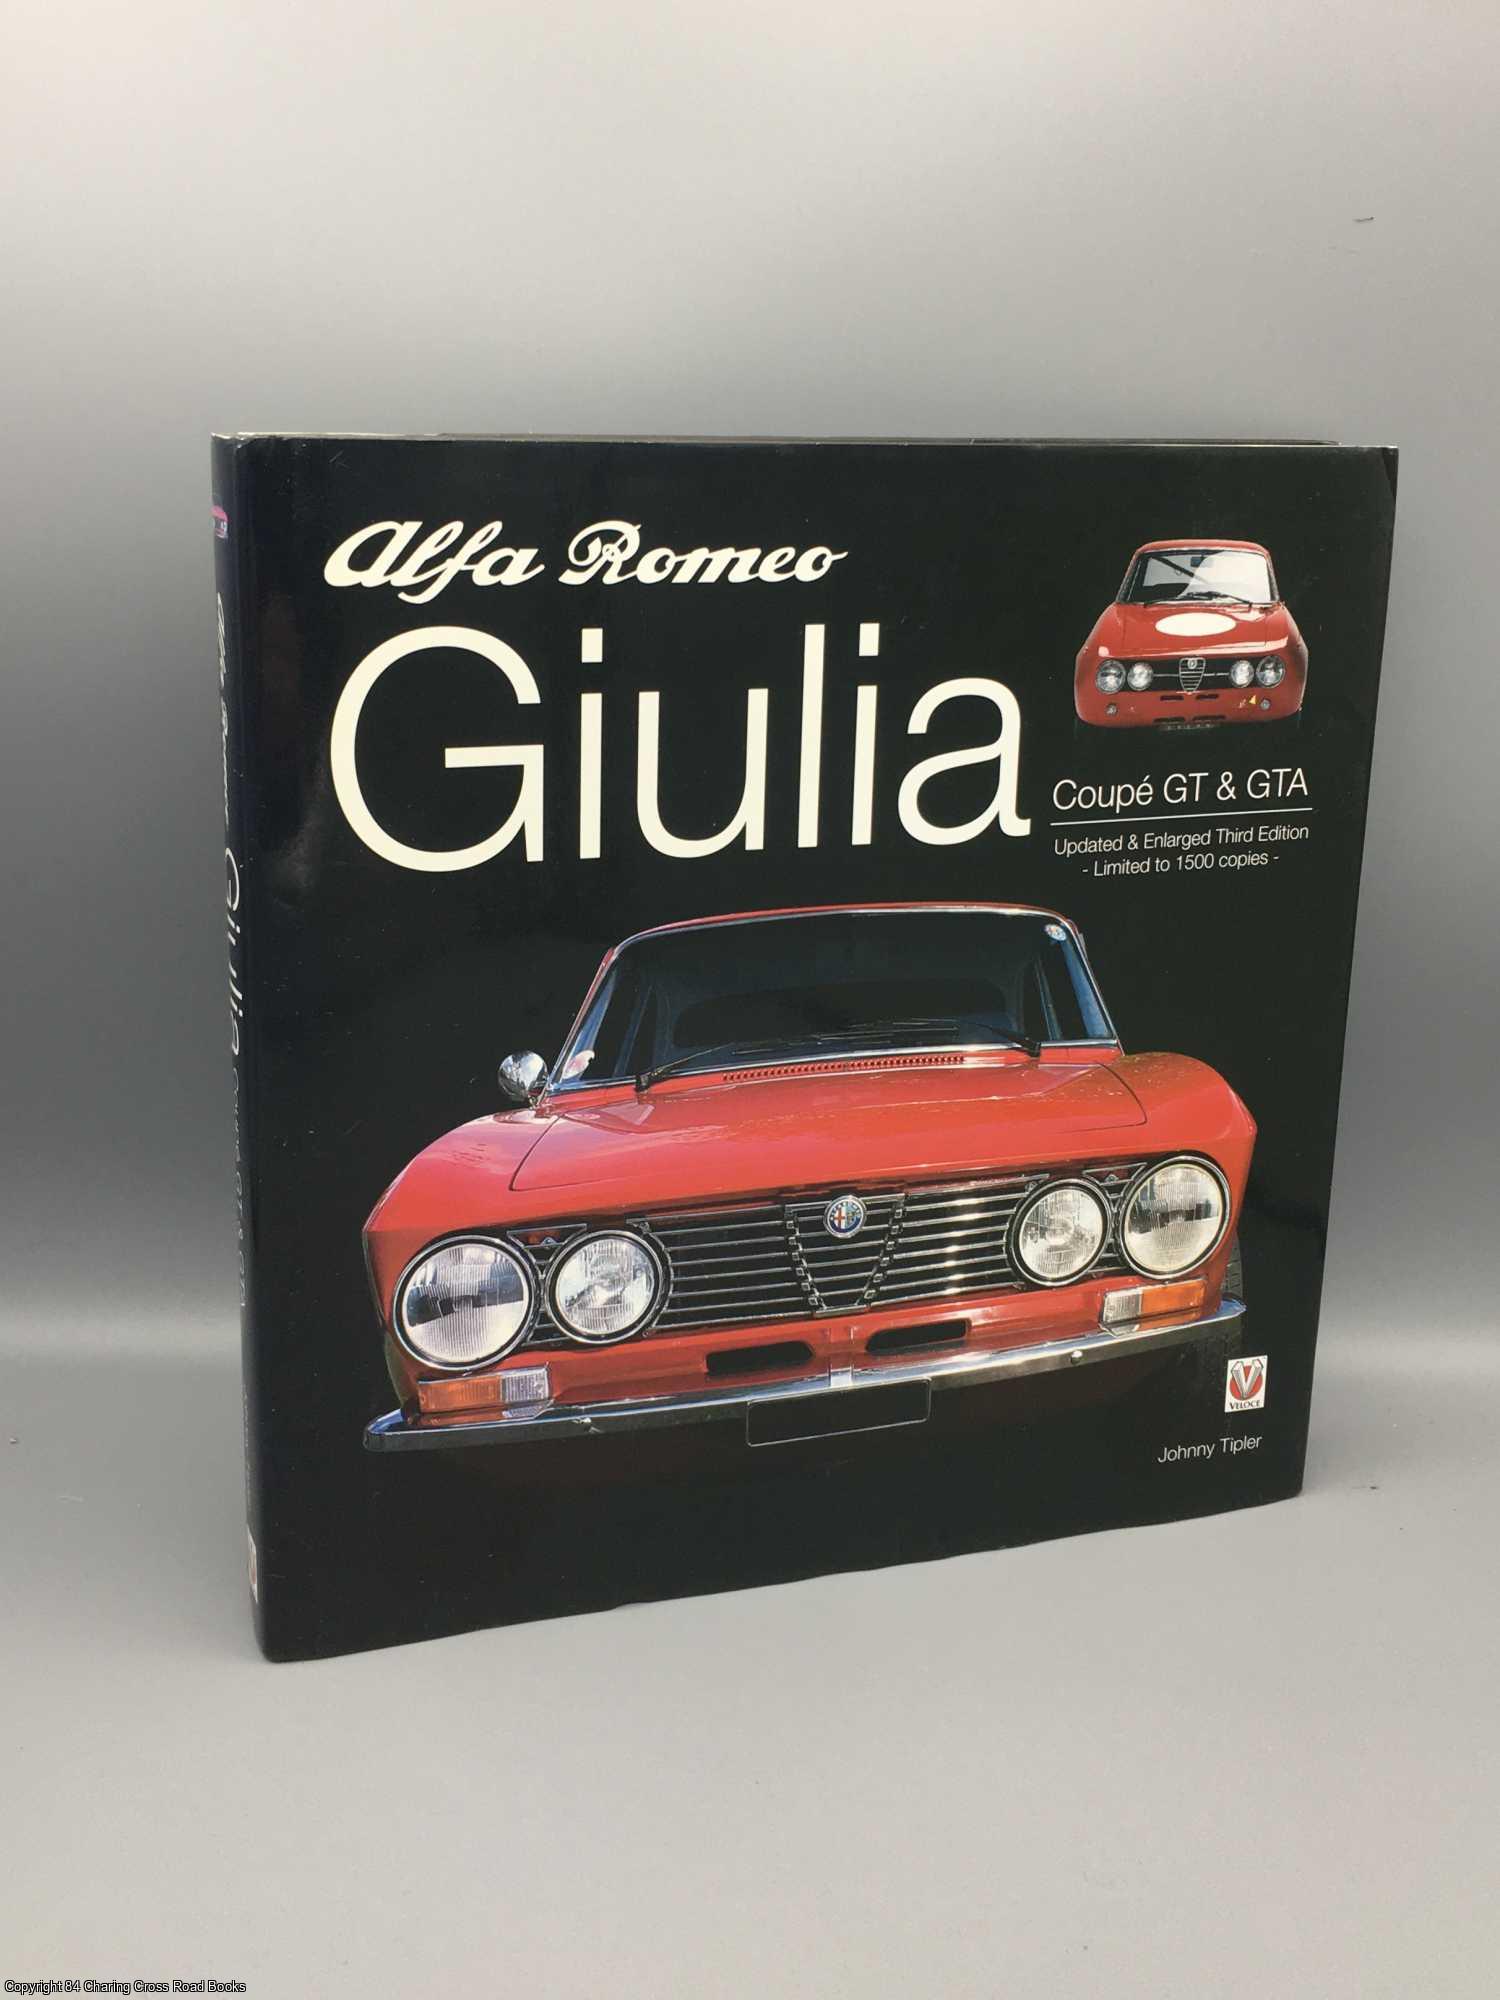 Tipler, Johnny - Alfa Romeo Giulia: Coupe GT & GTA